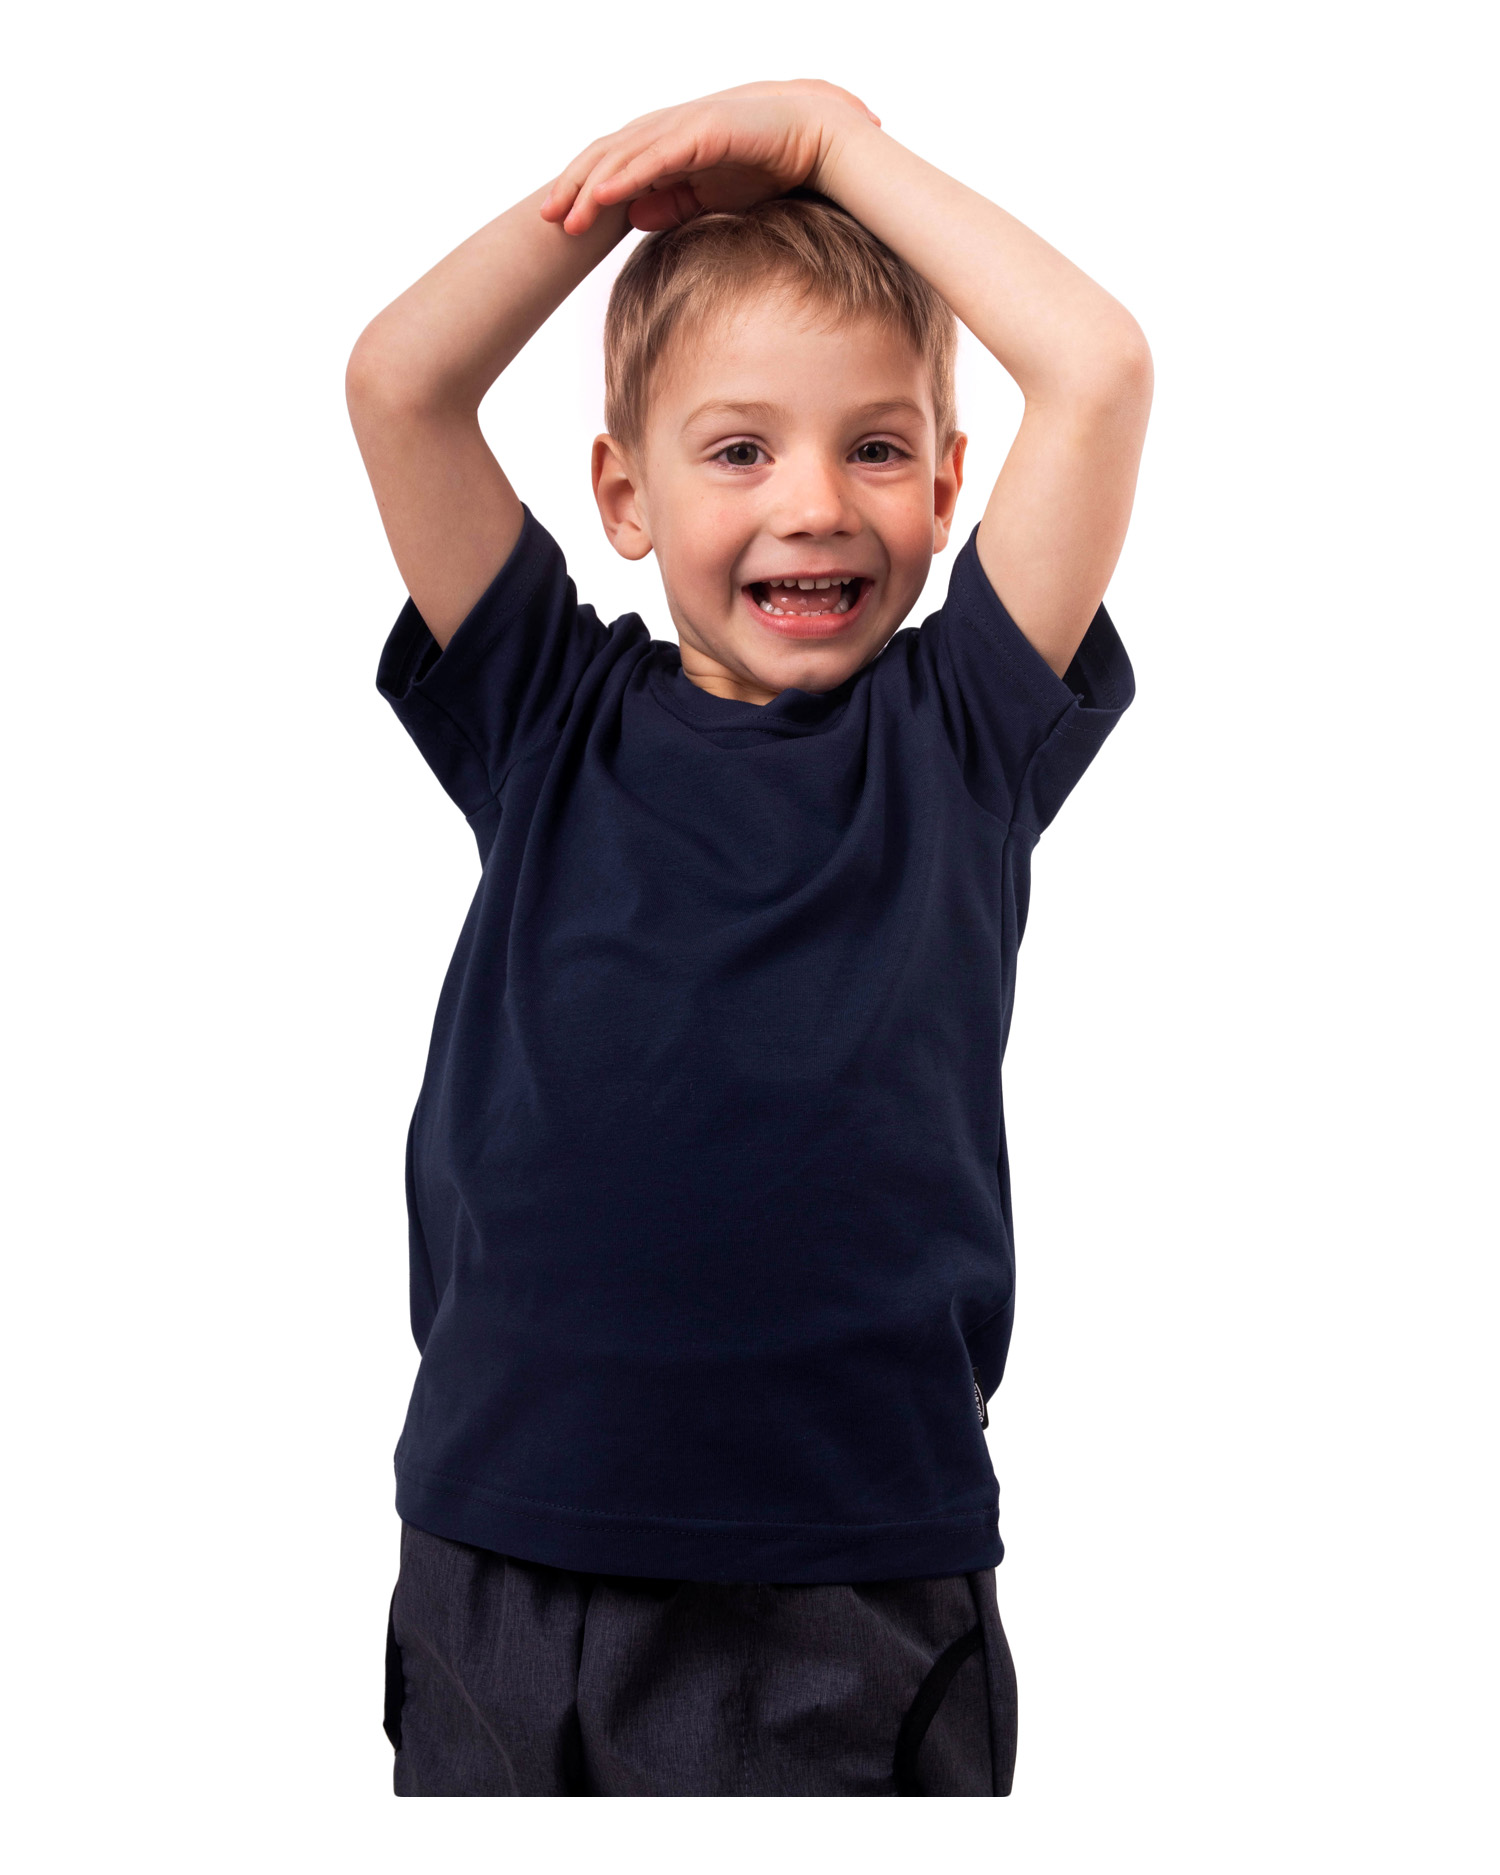 Children's T-shirt, short sleeve, dark blue